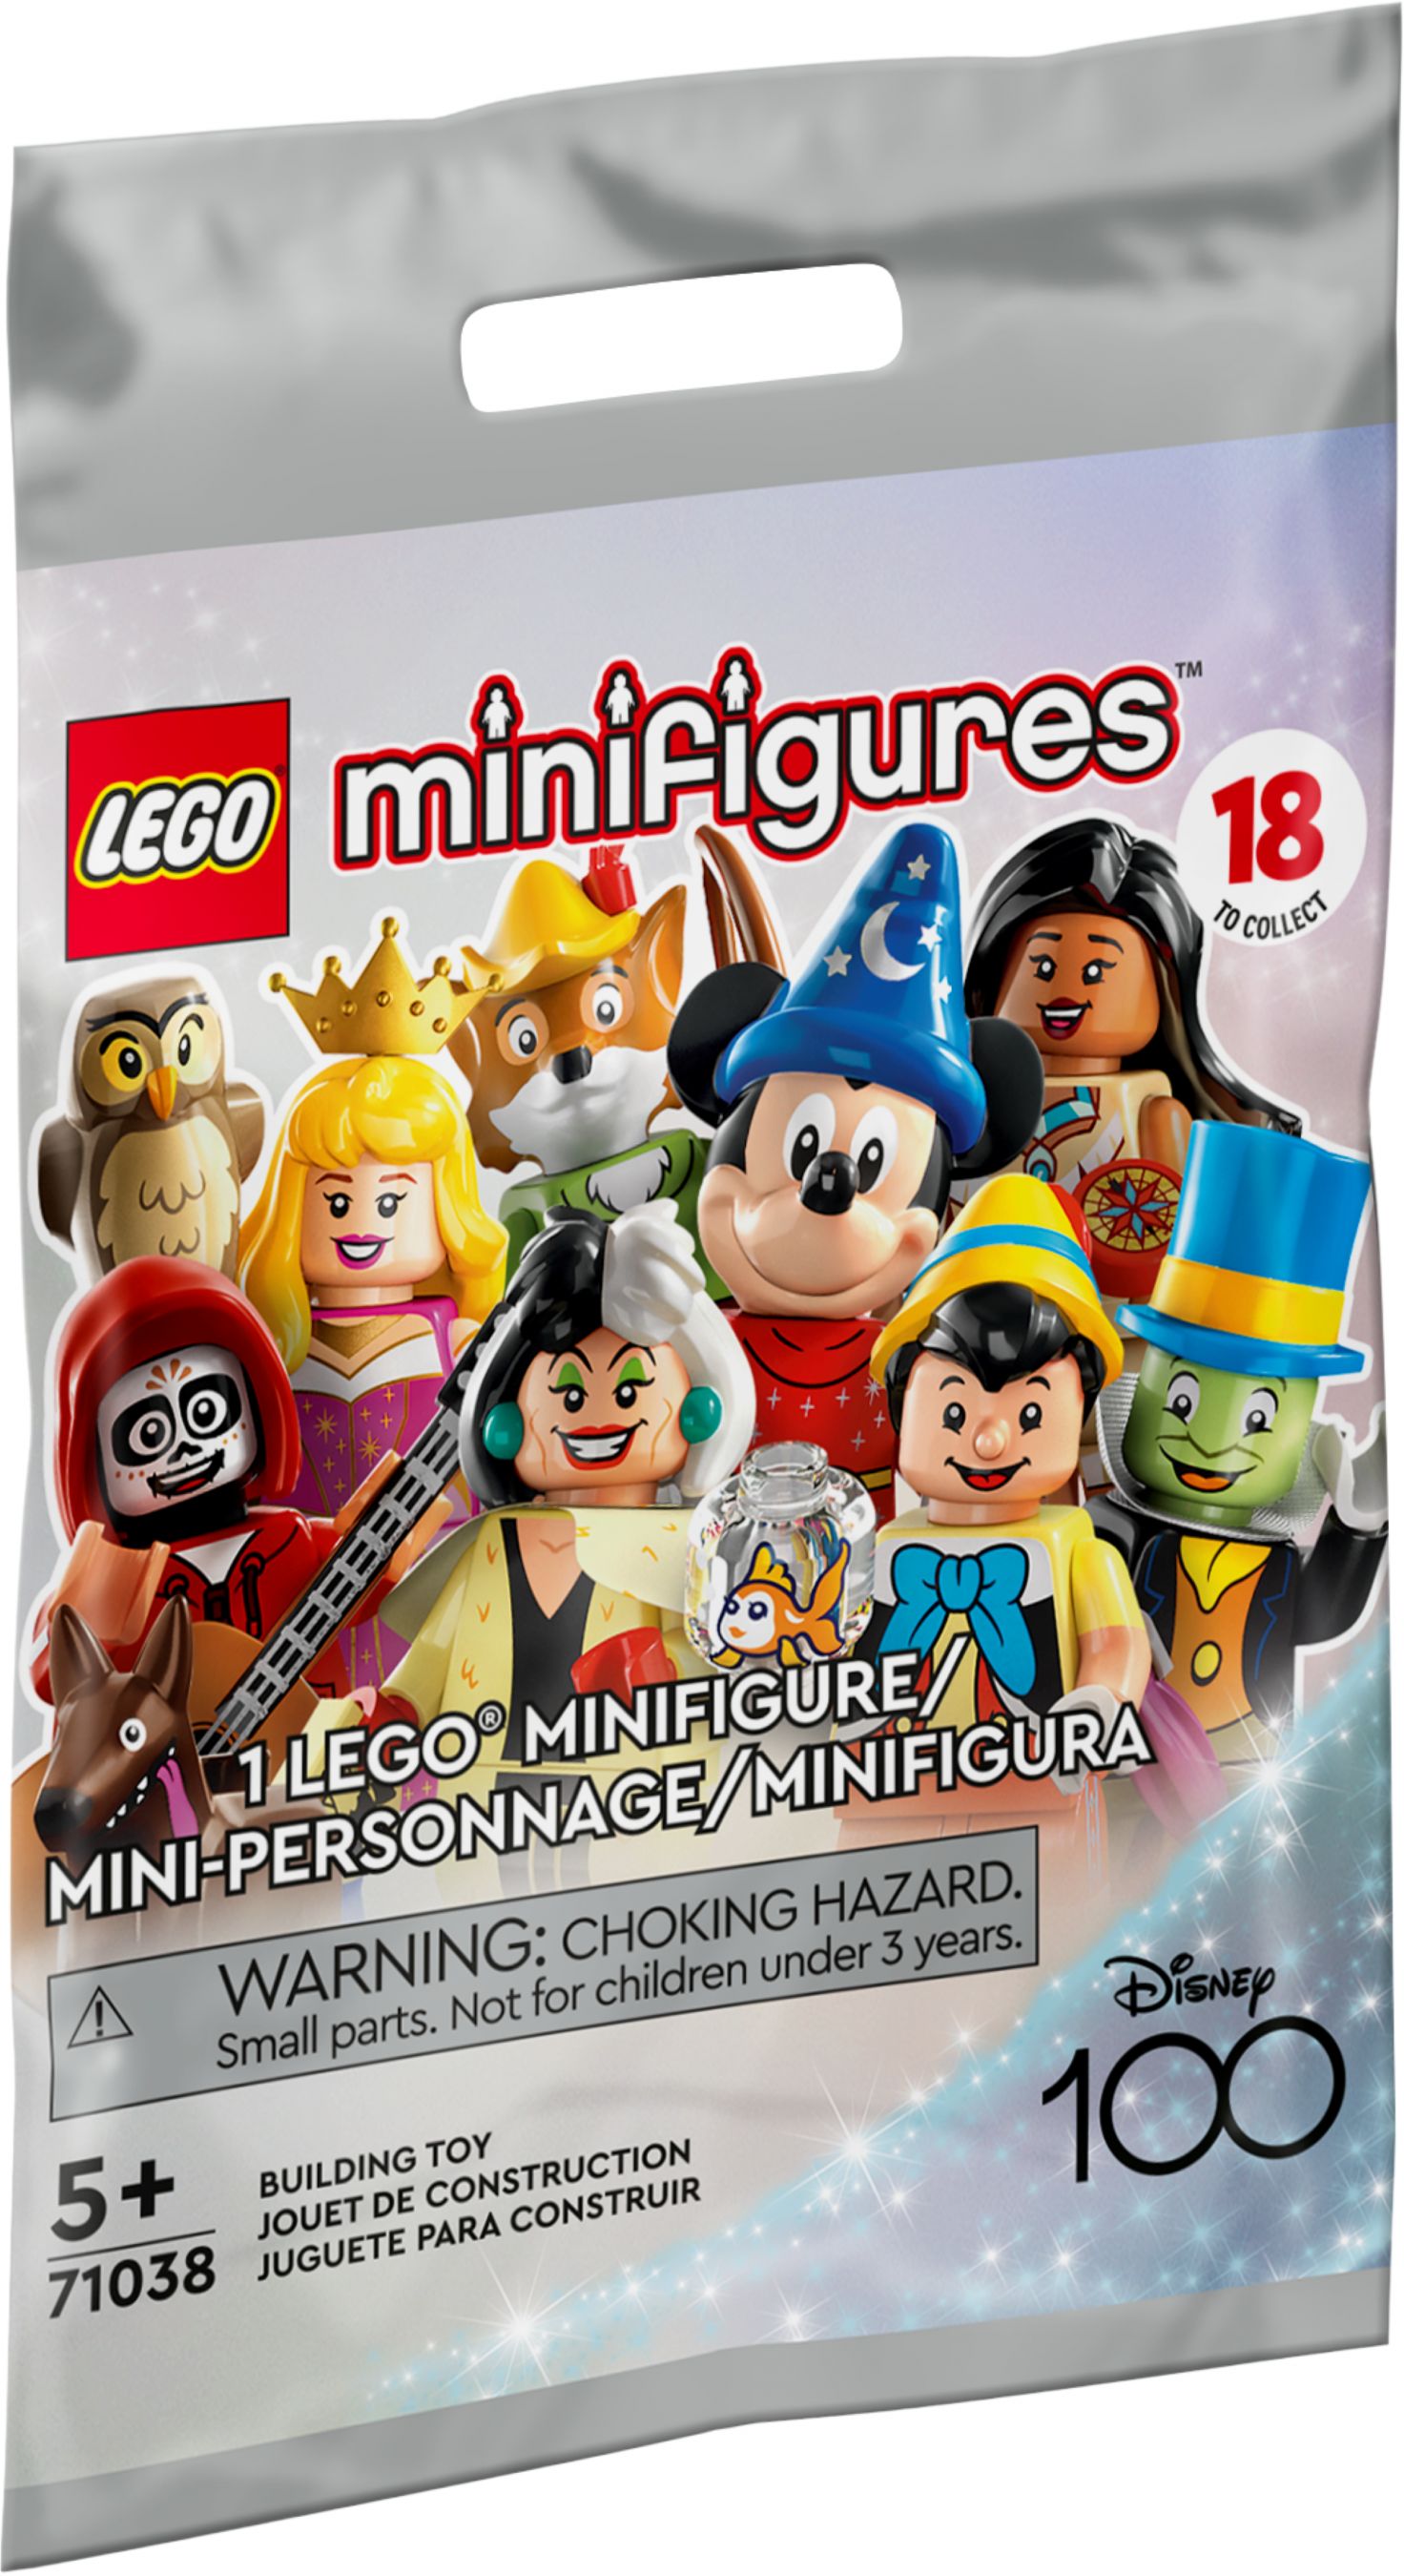 LEGO Collectable Minifigures 71038 Minifiguren Disney 100 - 2x 36er Box LEGO_71038_alt1.jpg